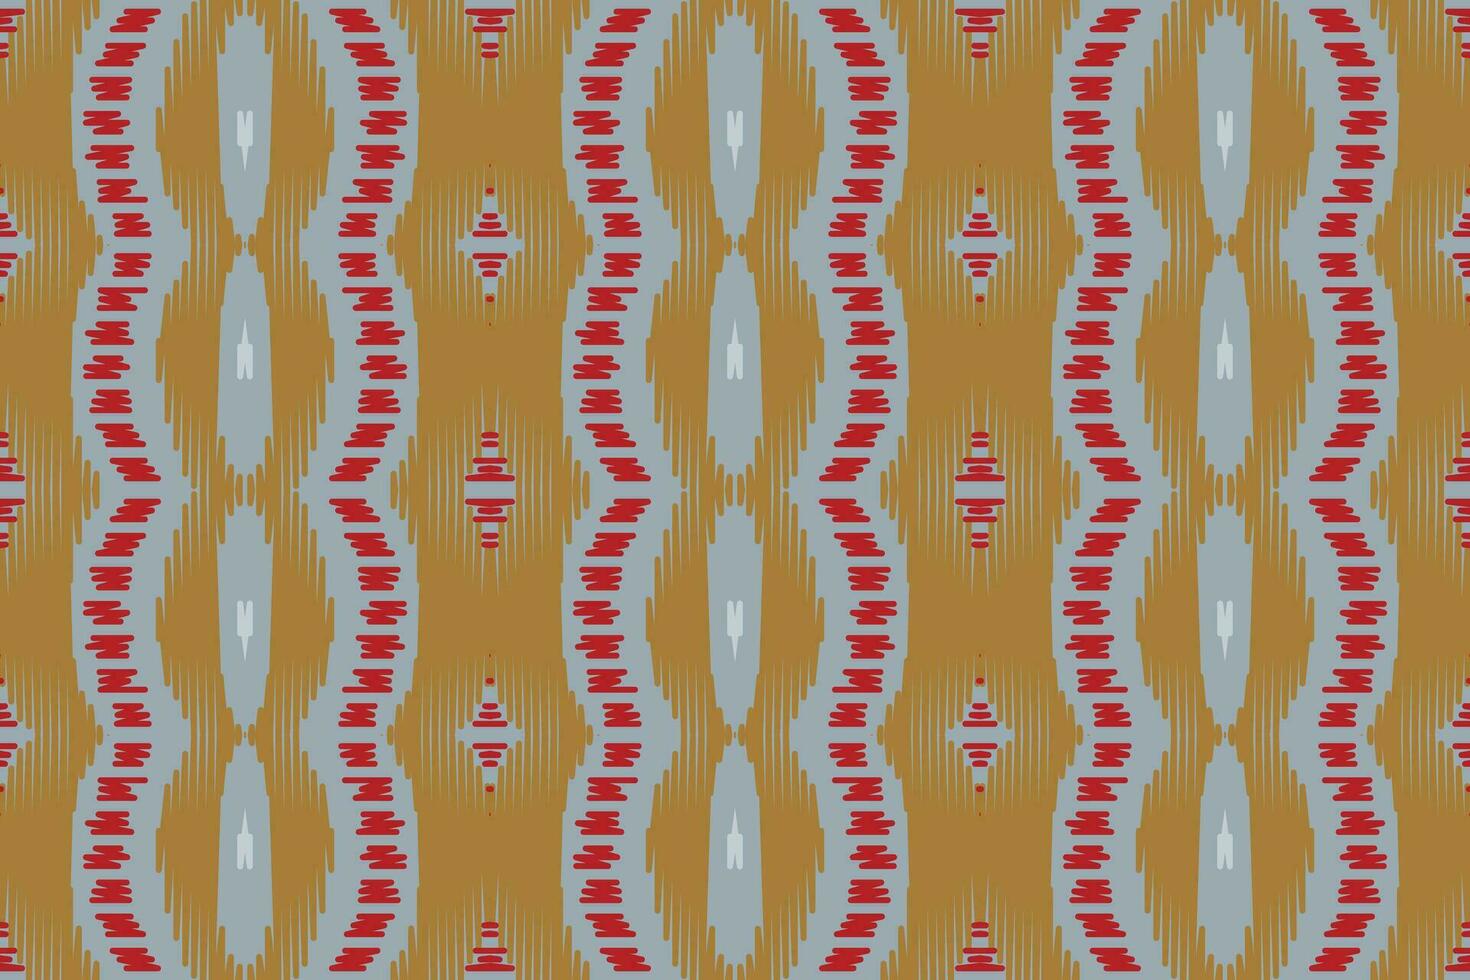 ikat tela cachemir bordado antecedentes. ikat diseños geométrico étnico oriental modelo tradicional. ikat azteca estilo resumen diseño para impresión textura,tela,sari,sari,alfombra. vector